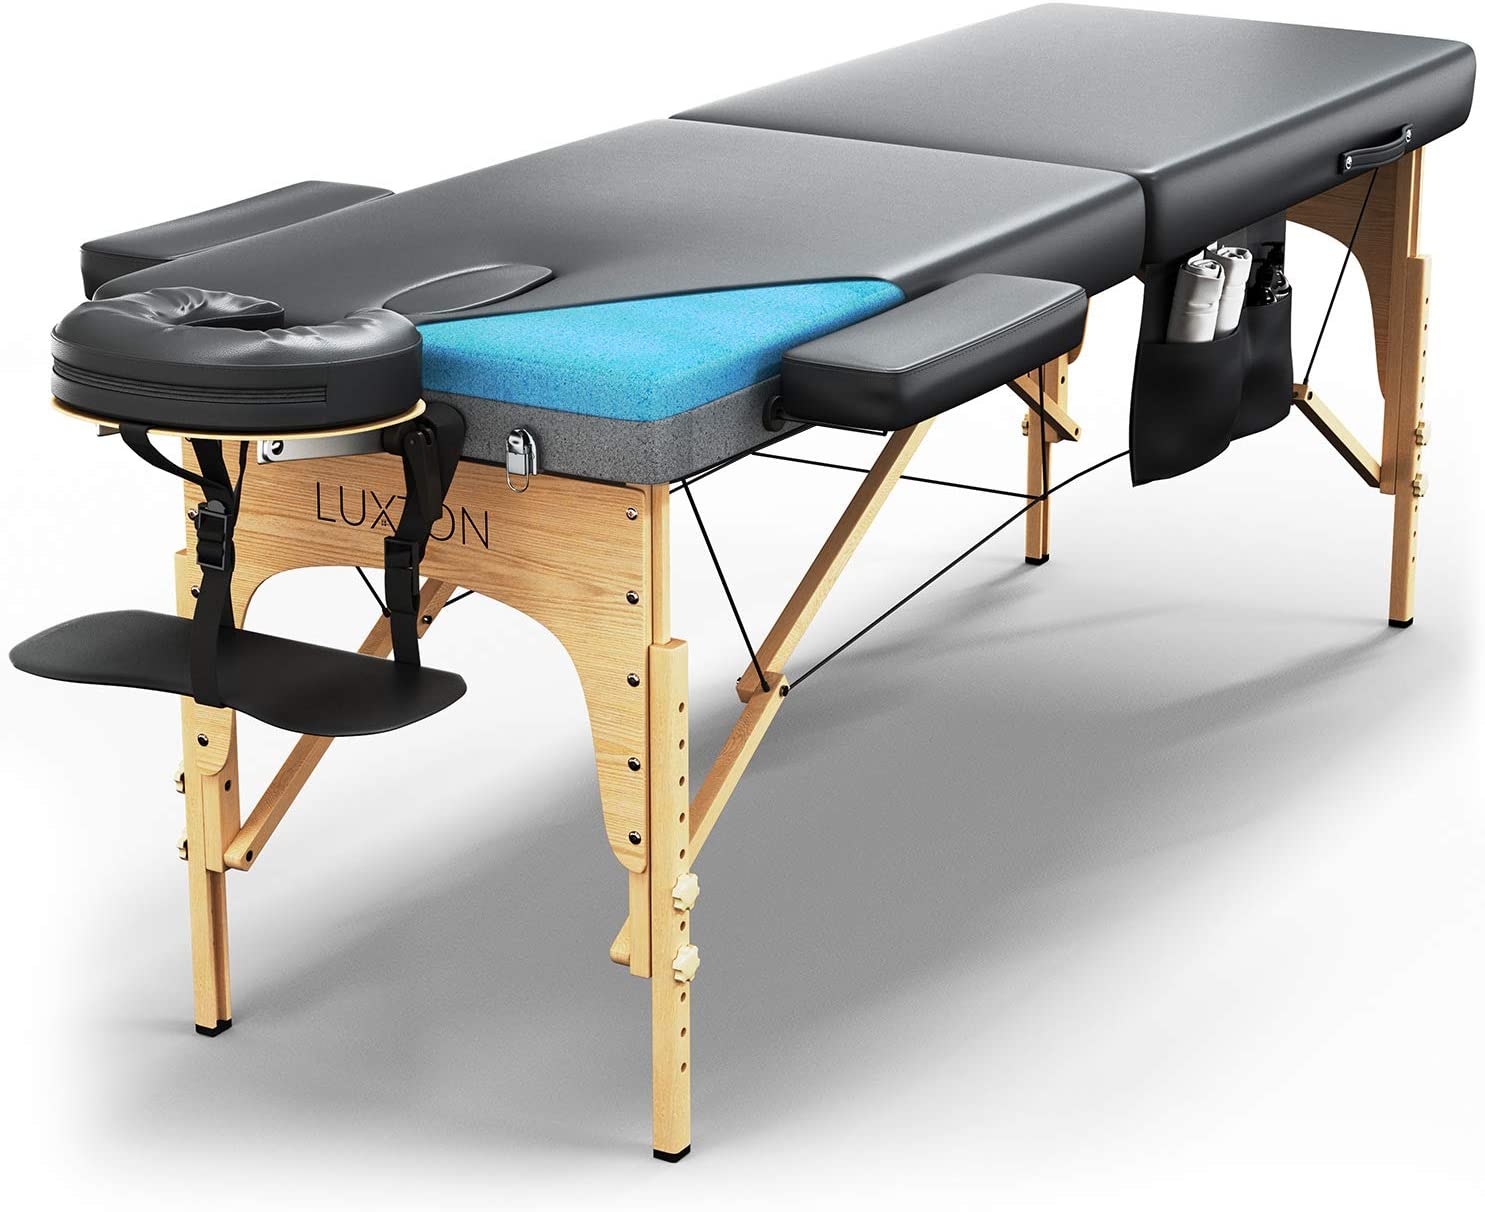  4. Luxton Home Premium Memory Foam Massage Table 